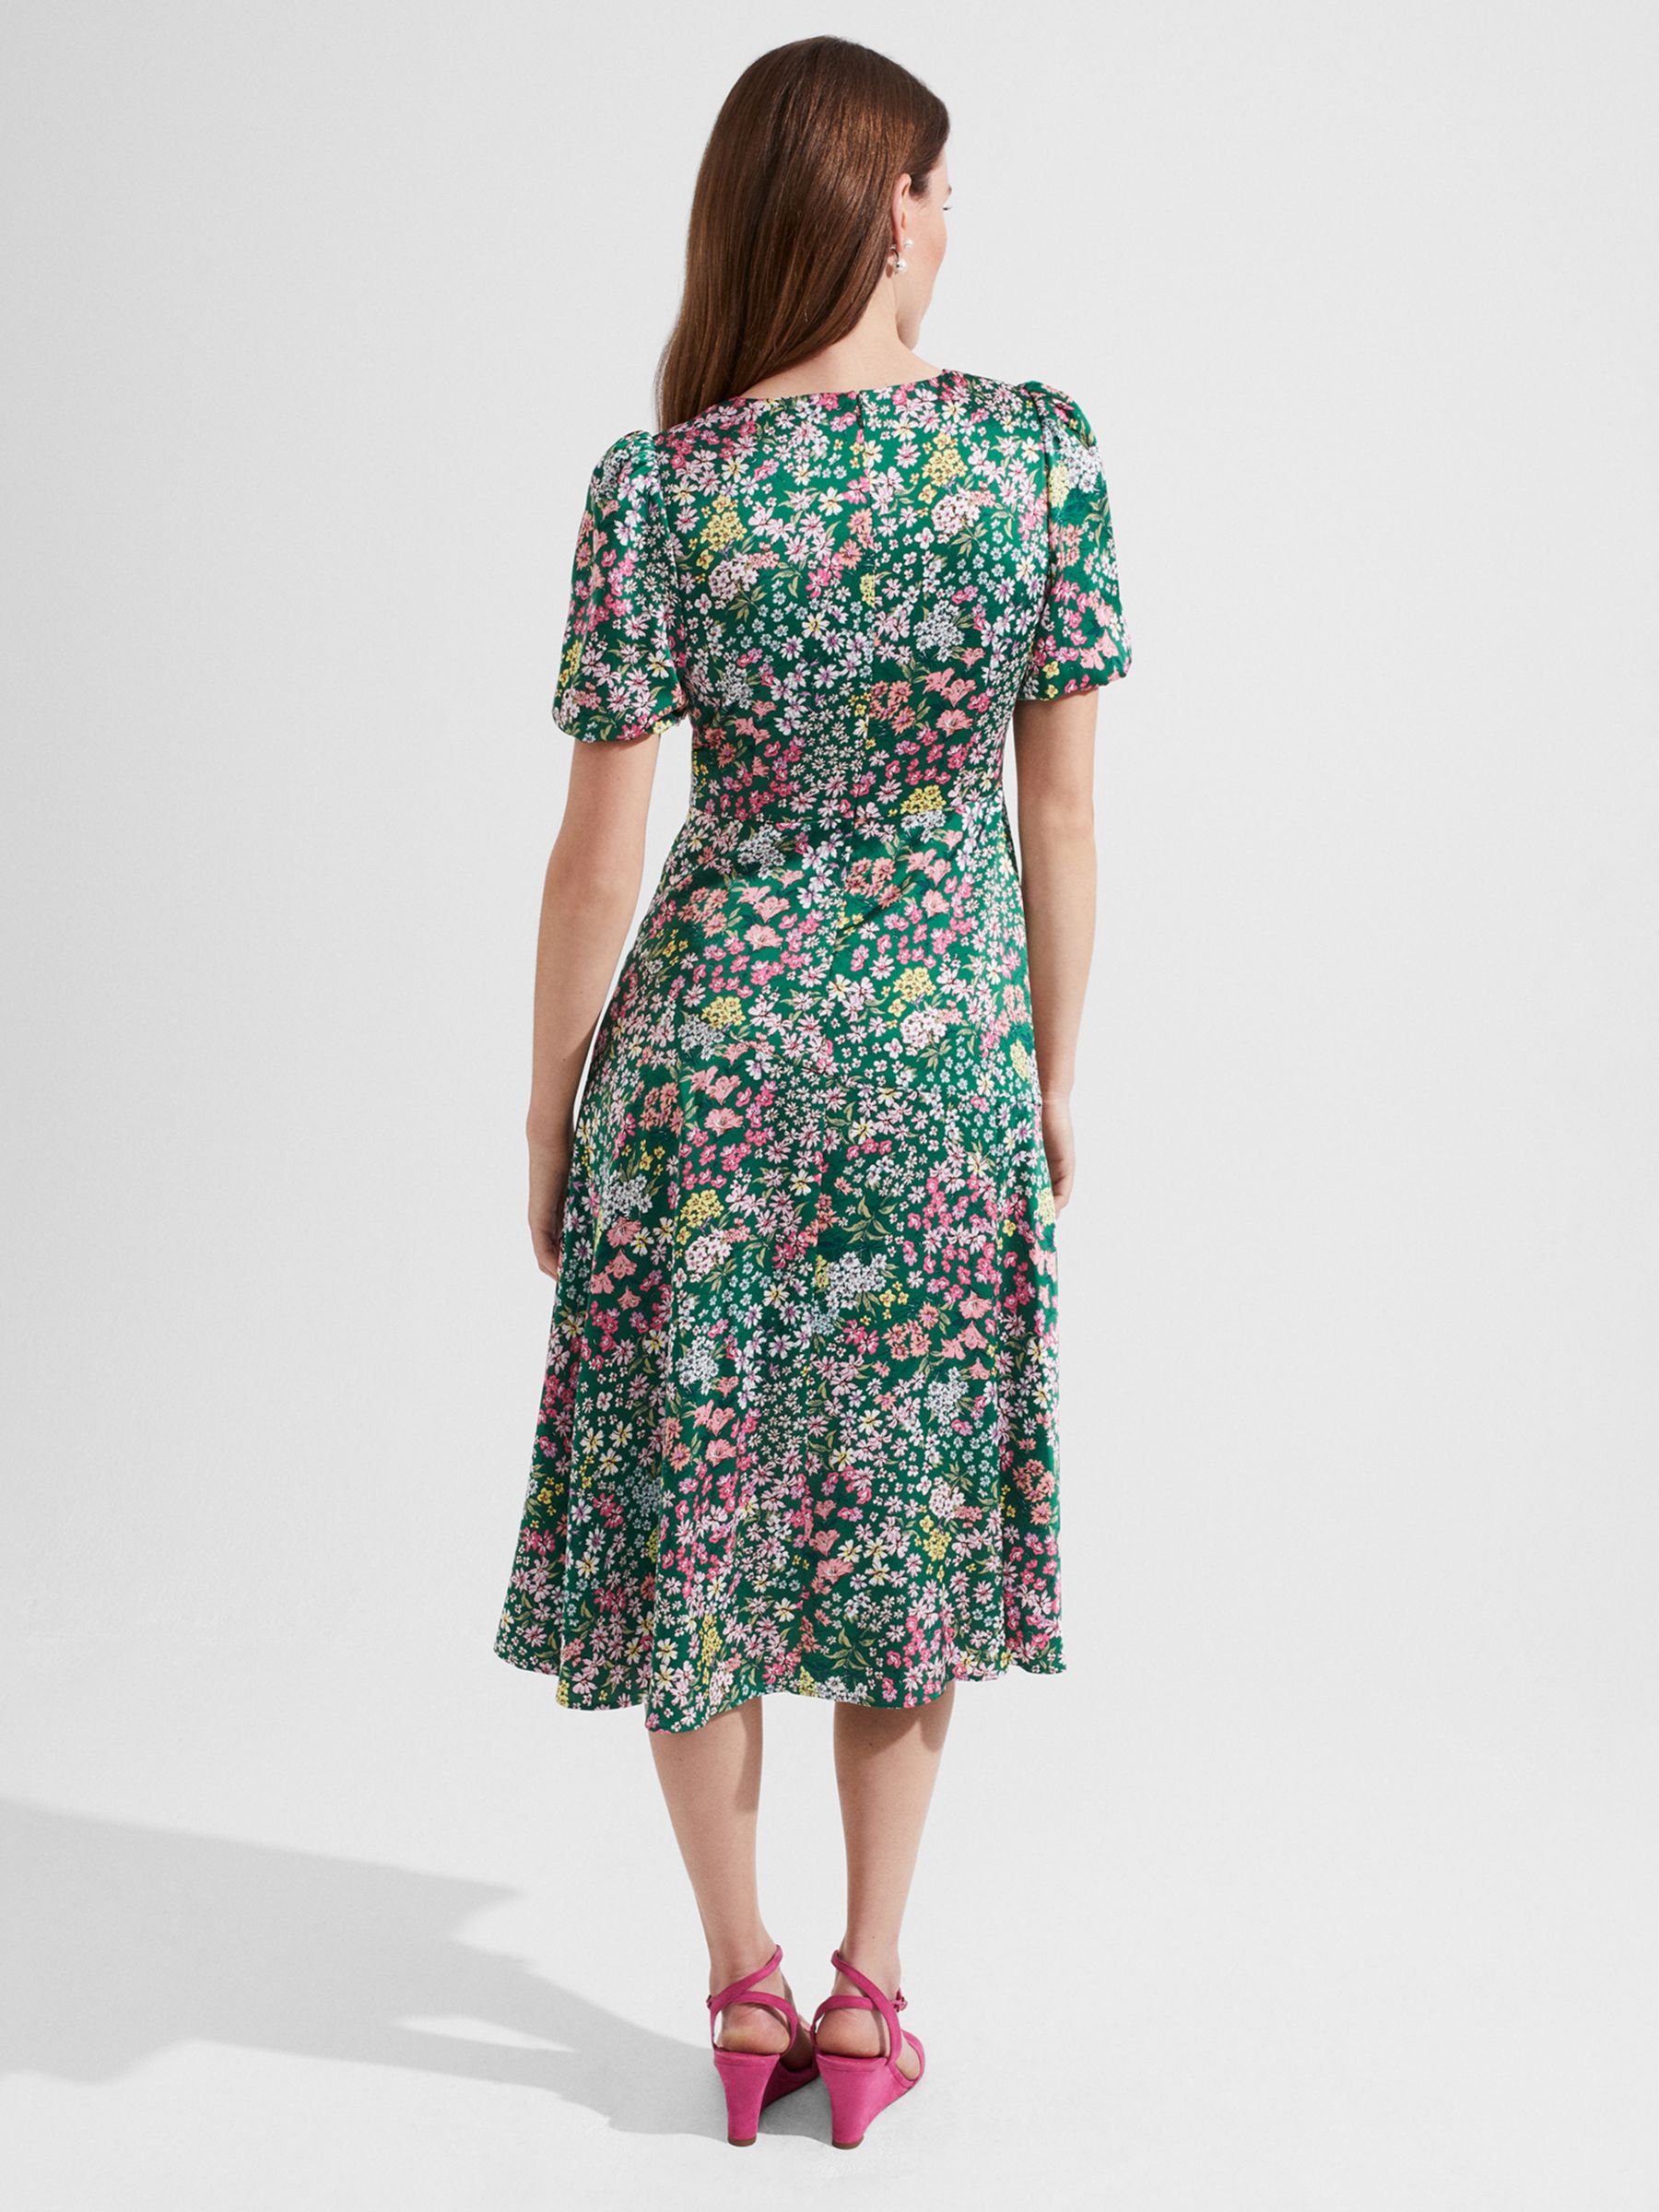 Hobbs Christina Midi Floral Dress, Green/Multi, 10